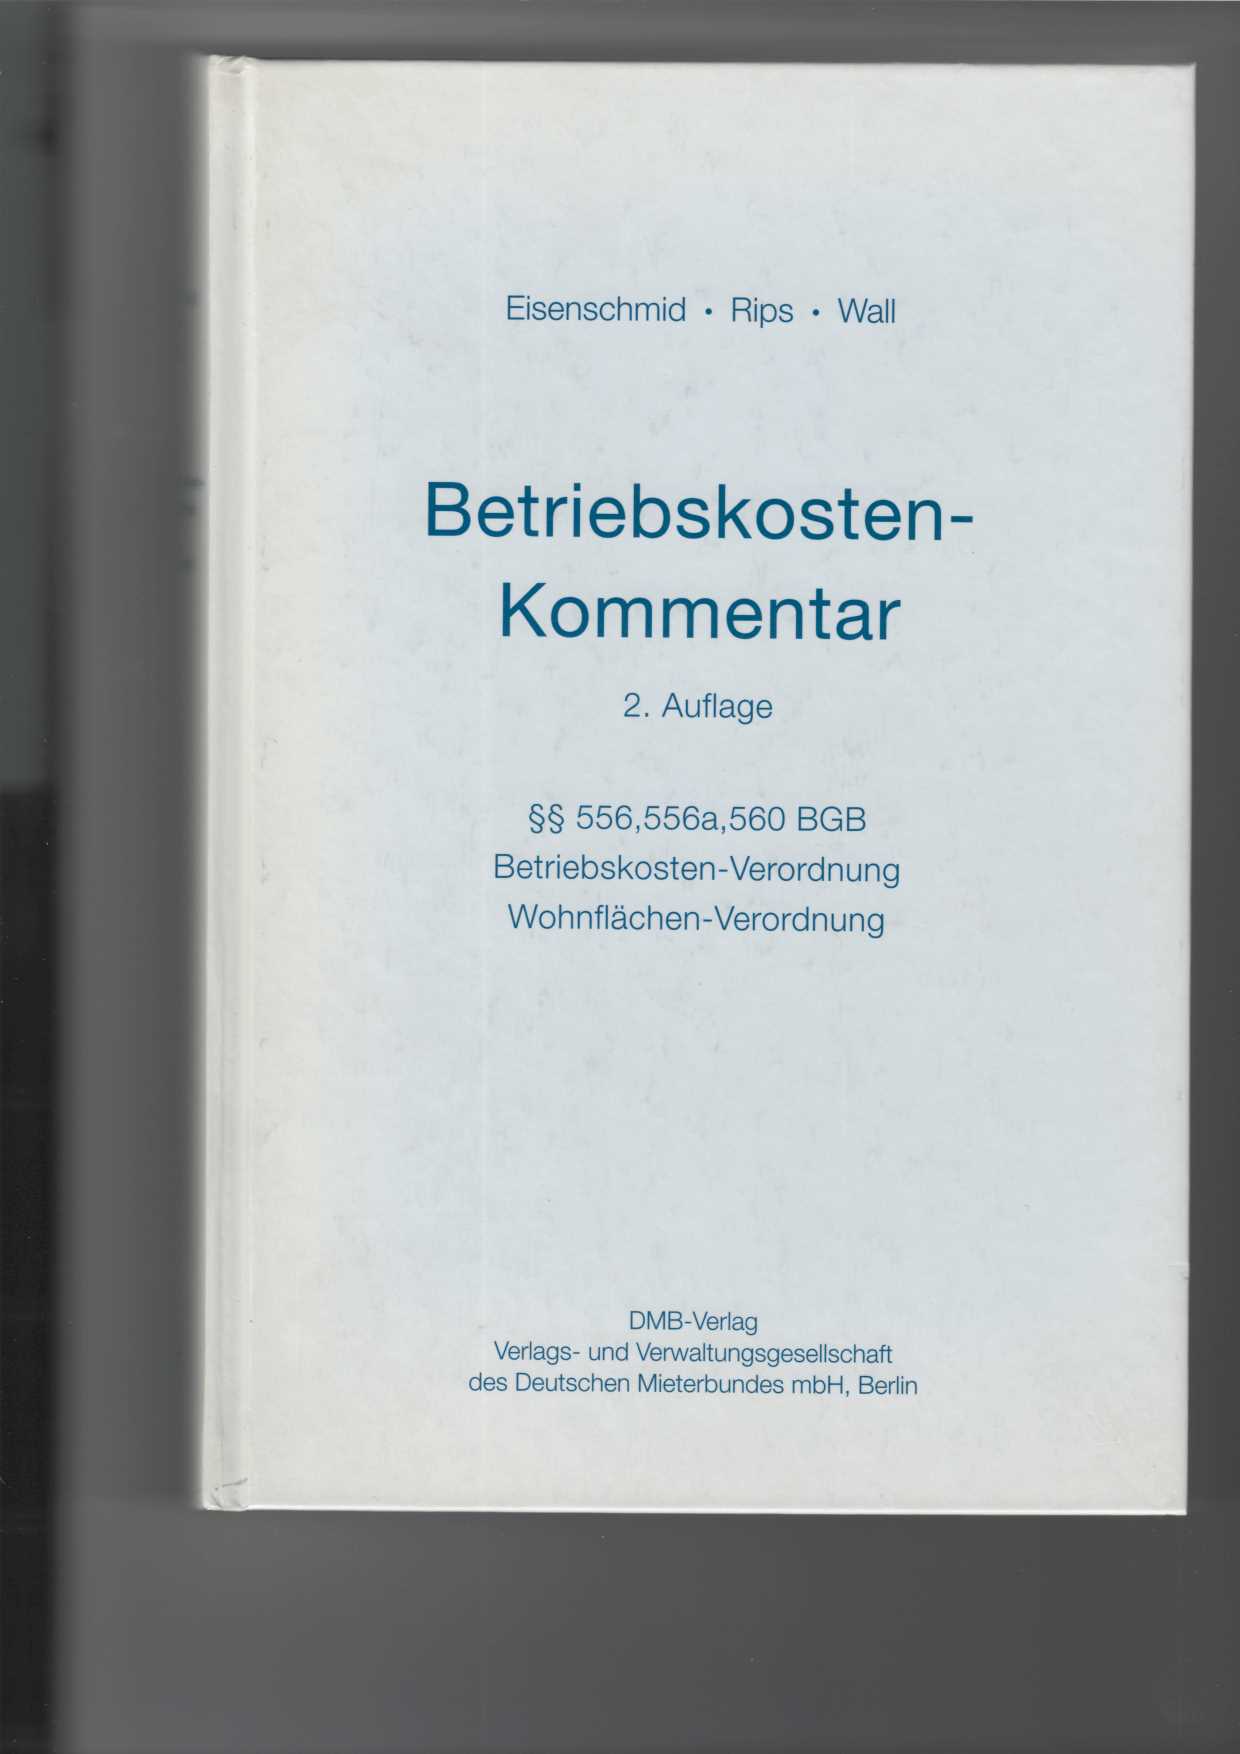 Eisenschmid, Norbert, Franz-Georg Rips und Dietmar Wall:  Betriebskosten-Kommentar. 